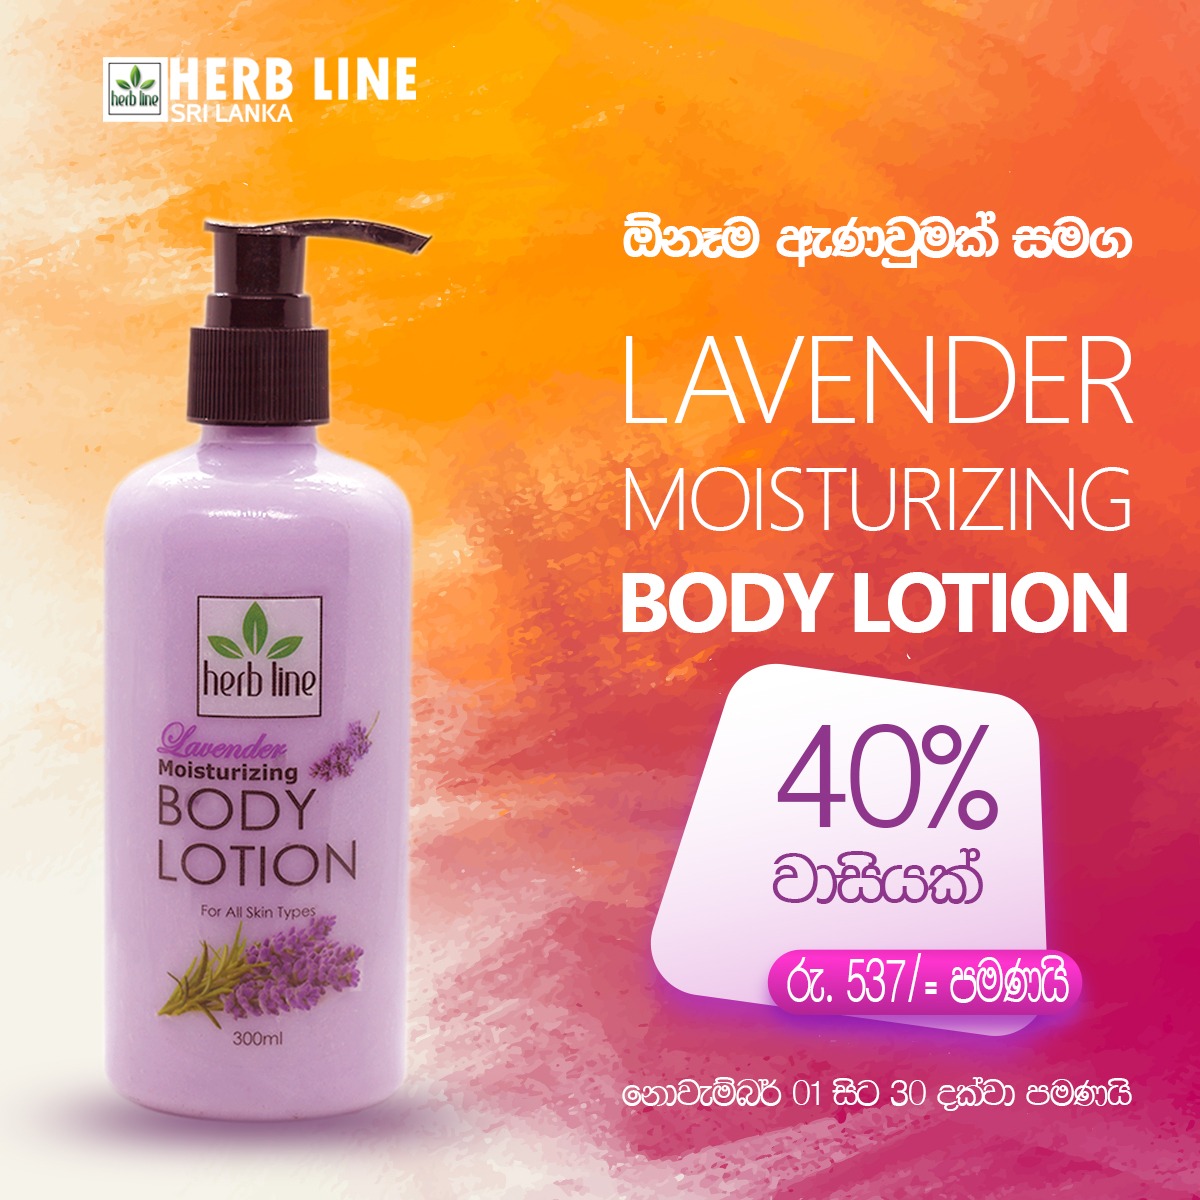 Lavender Moisturizing Body Lotion Offer